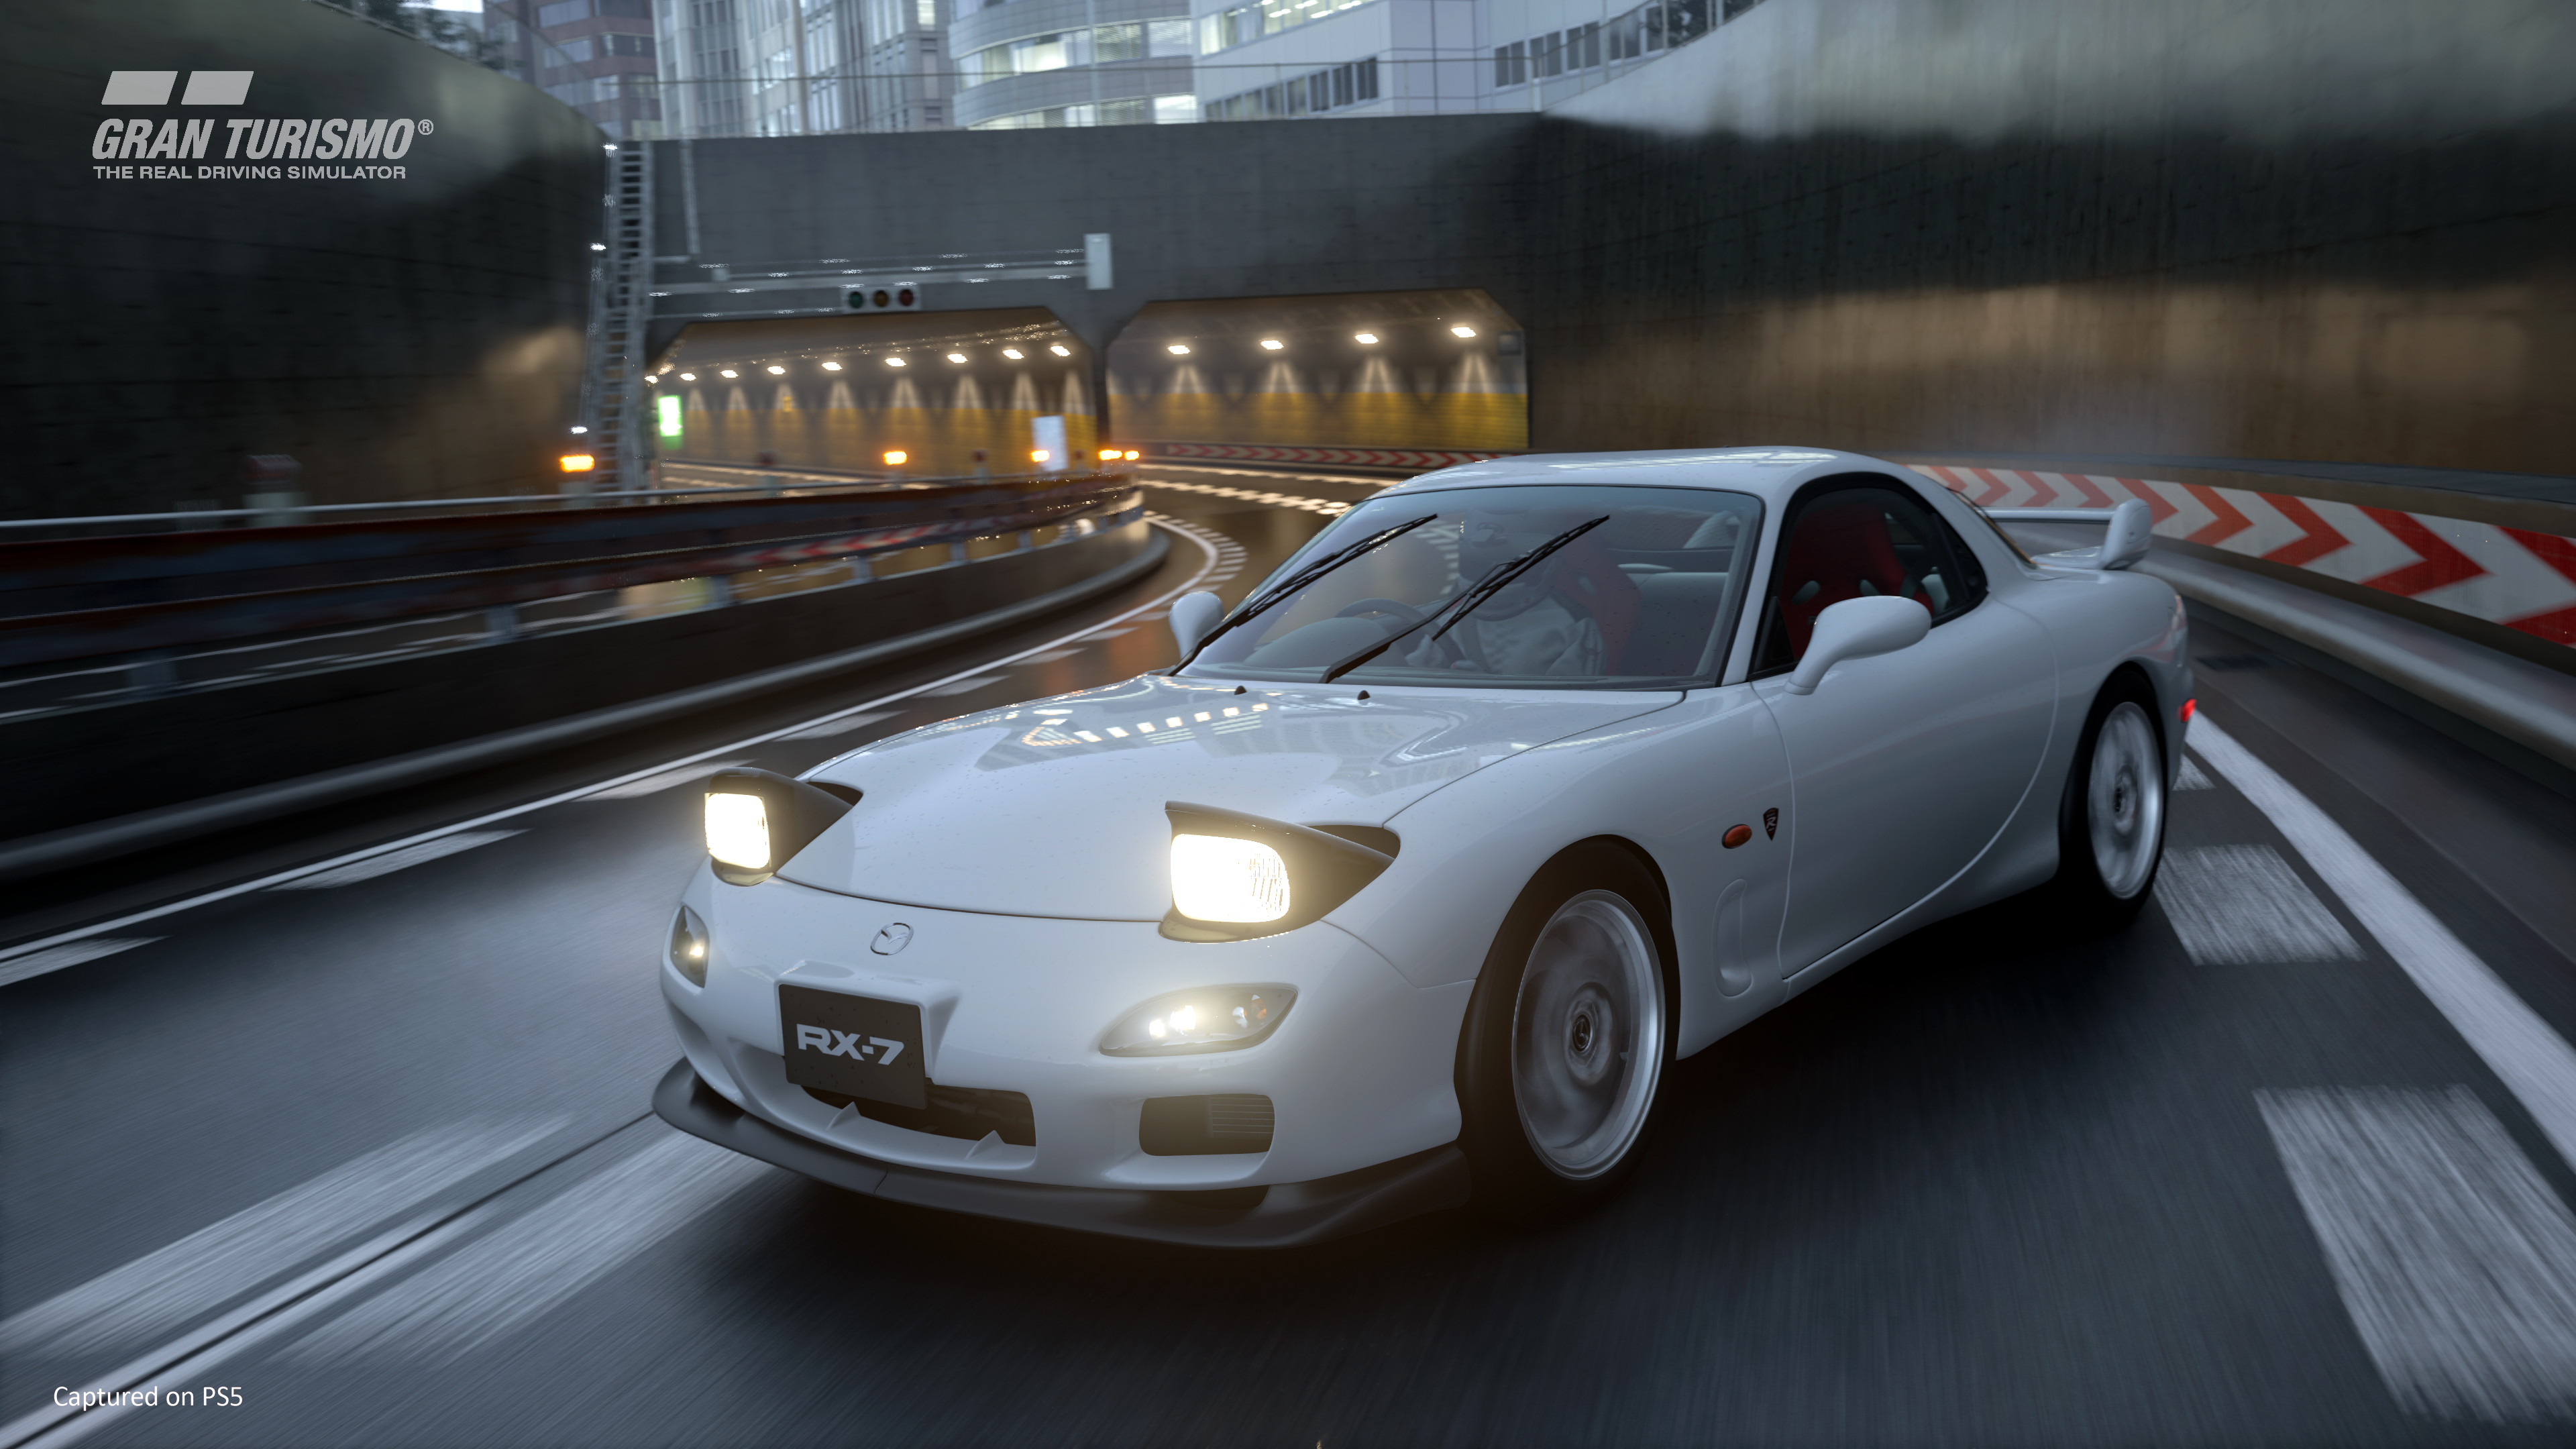 5 racing simulator games to play like Gran Turismo 7